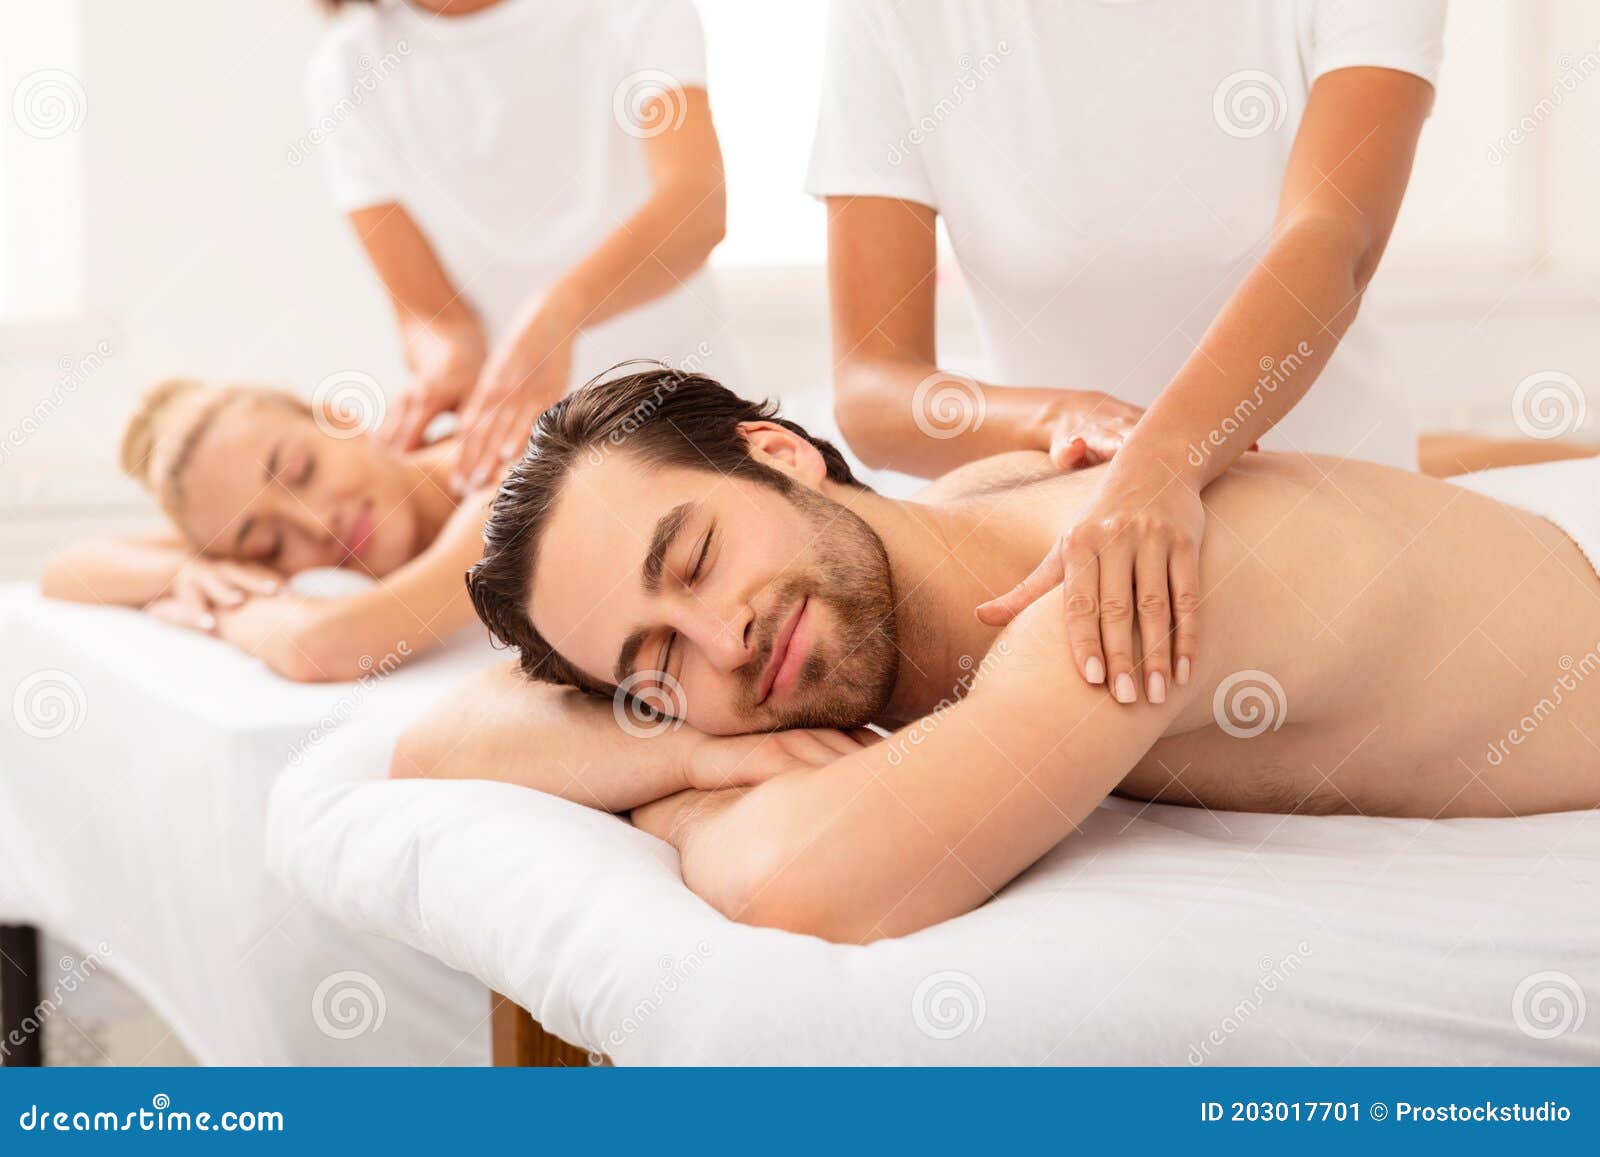 wife gets free massage